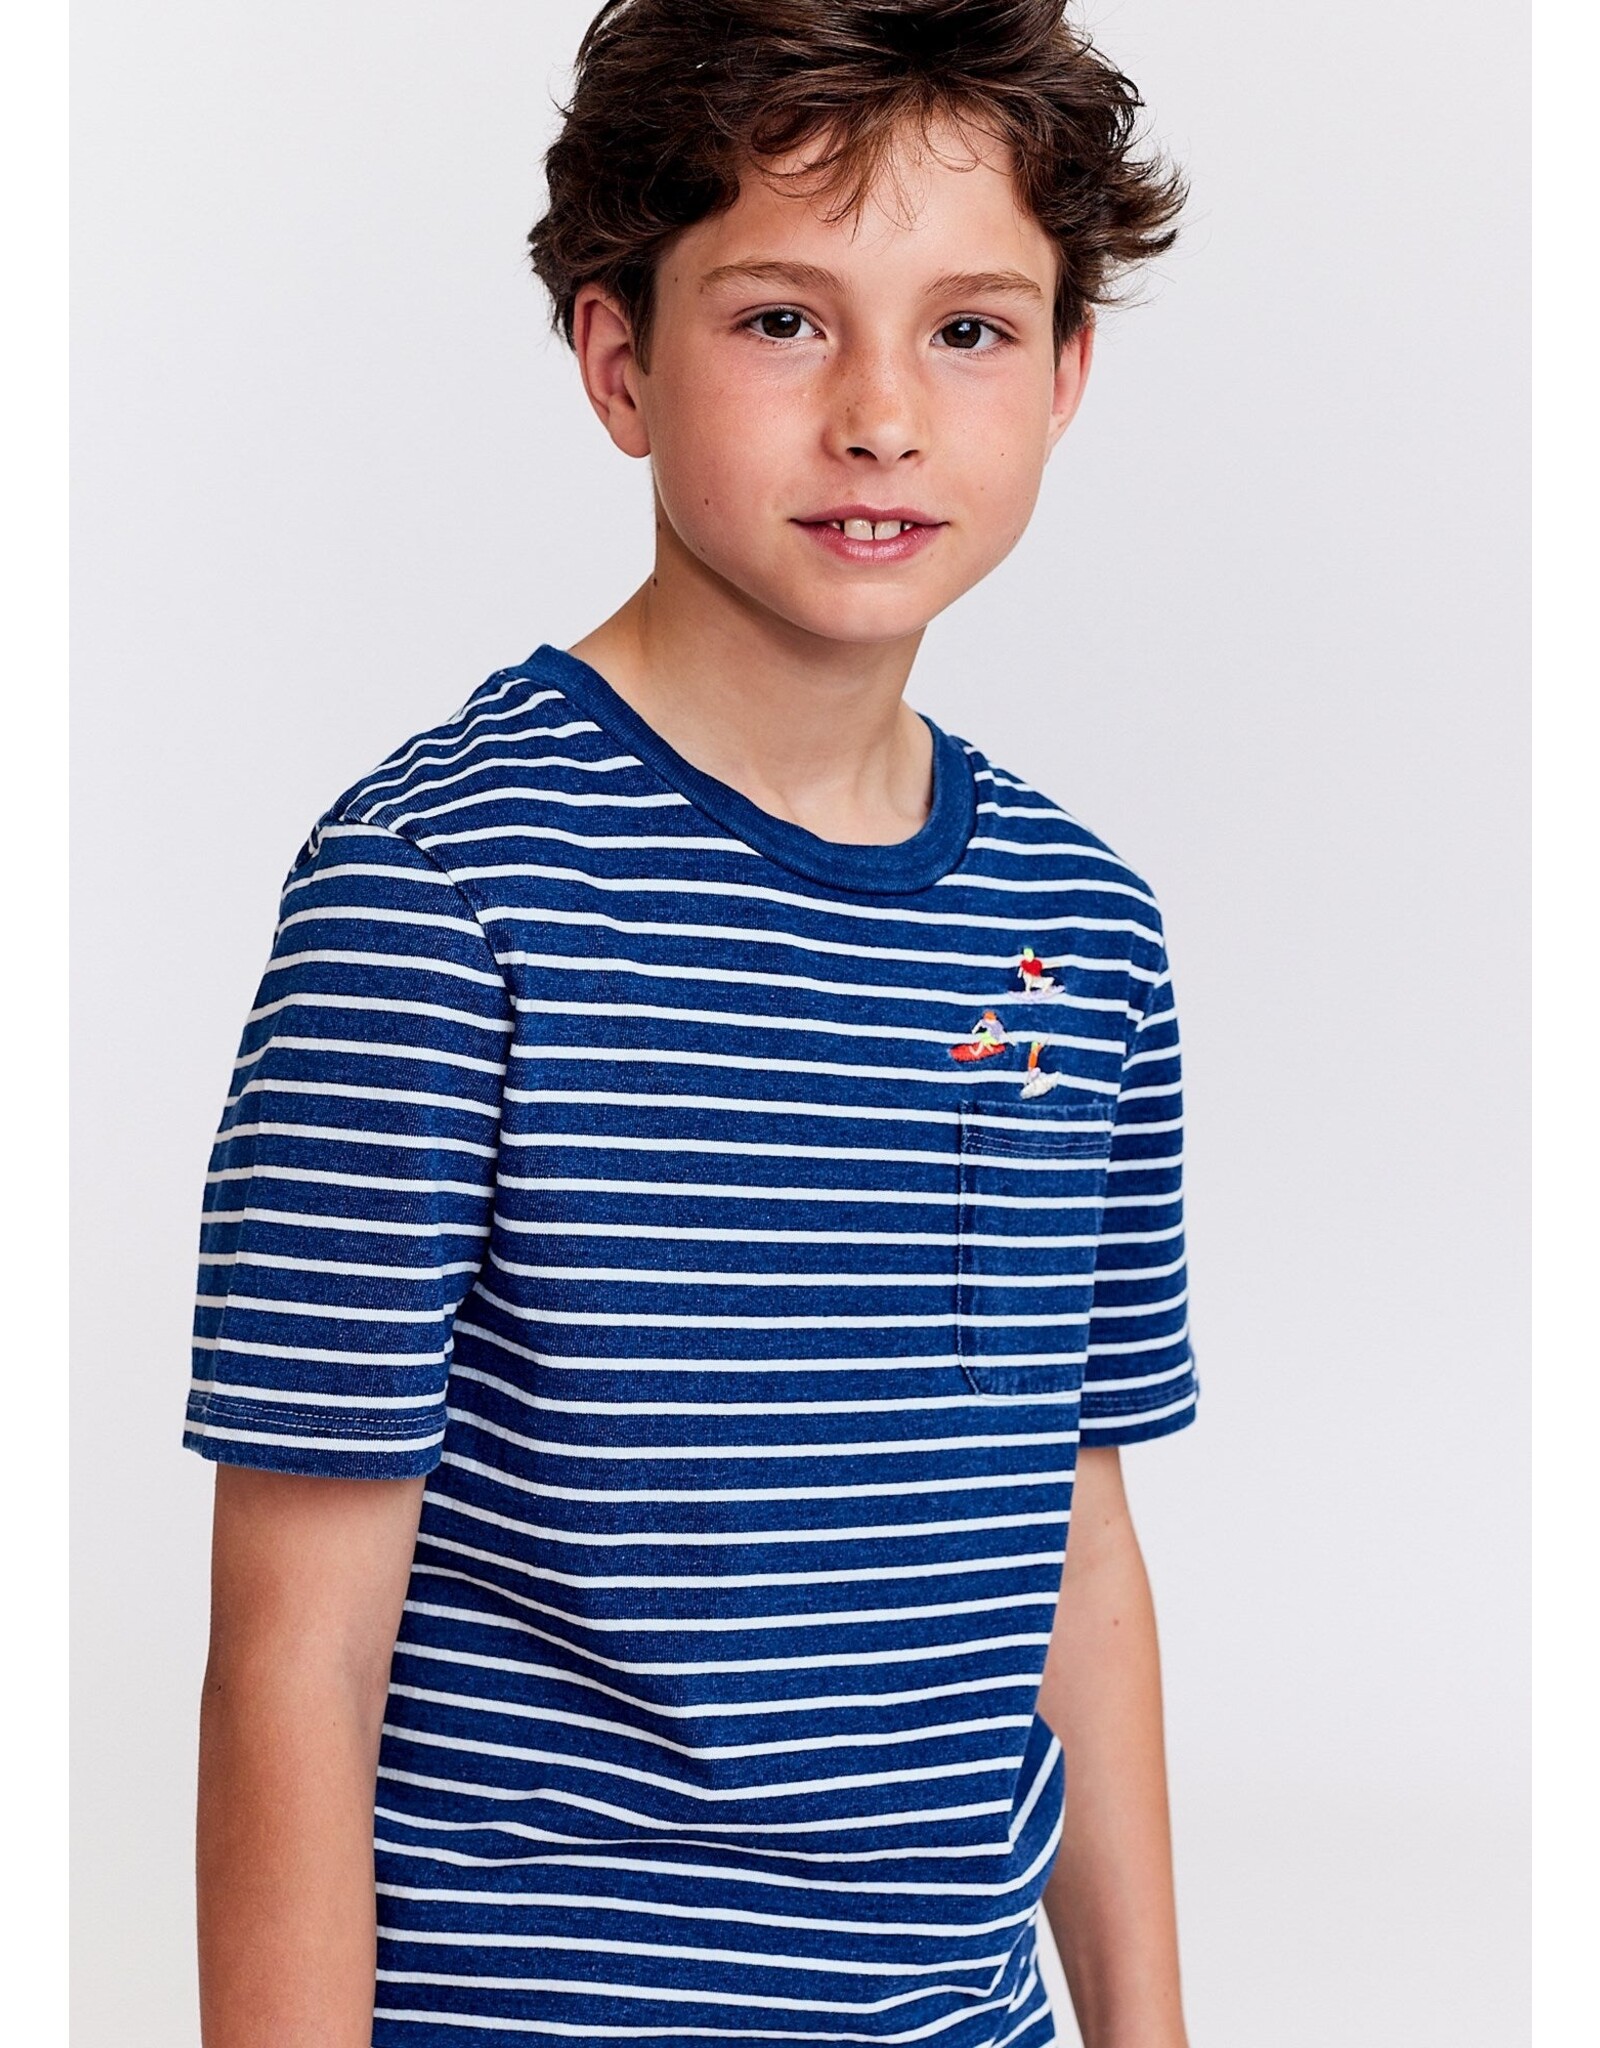 A076 t-shirt mick striped indigo